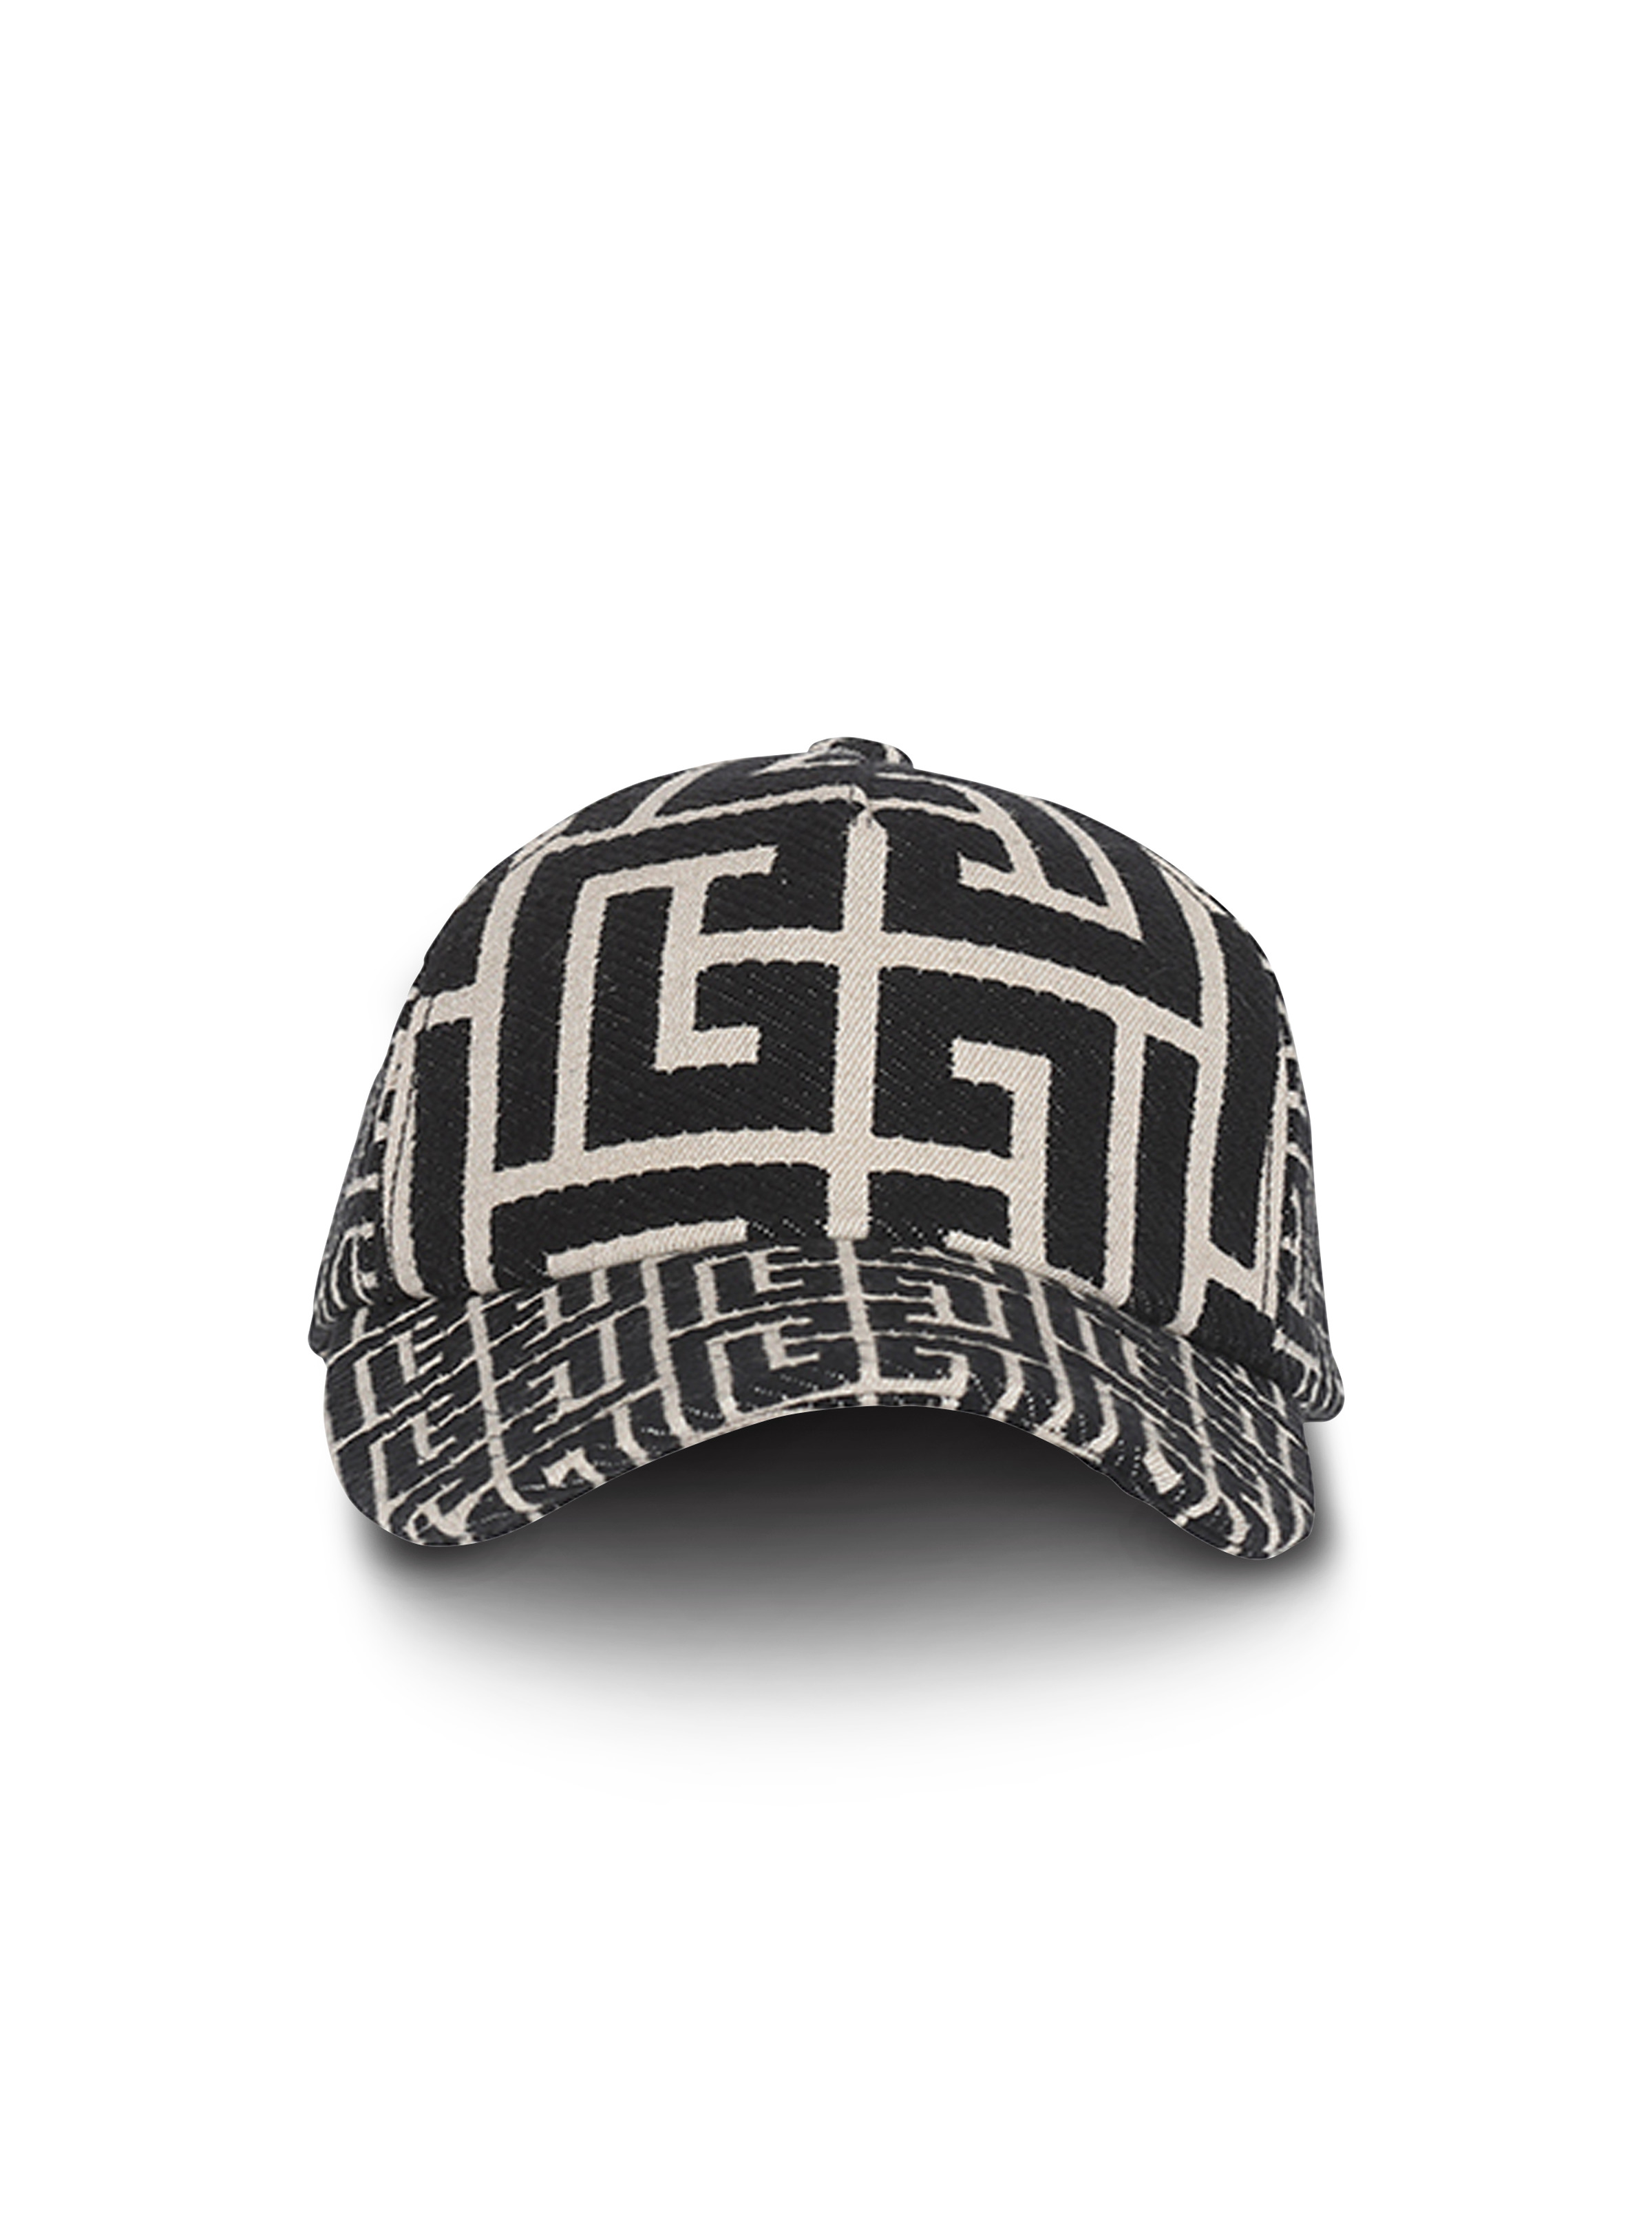 Jacquard bucket hat with Balmain monogram